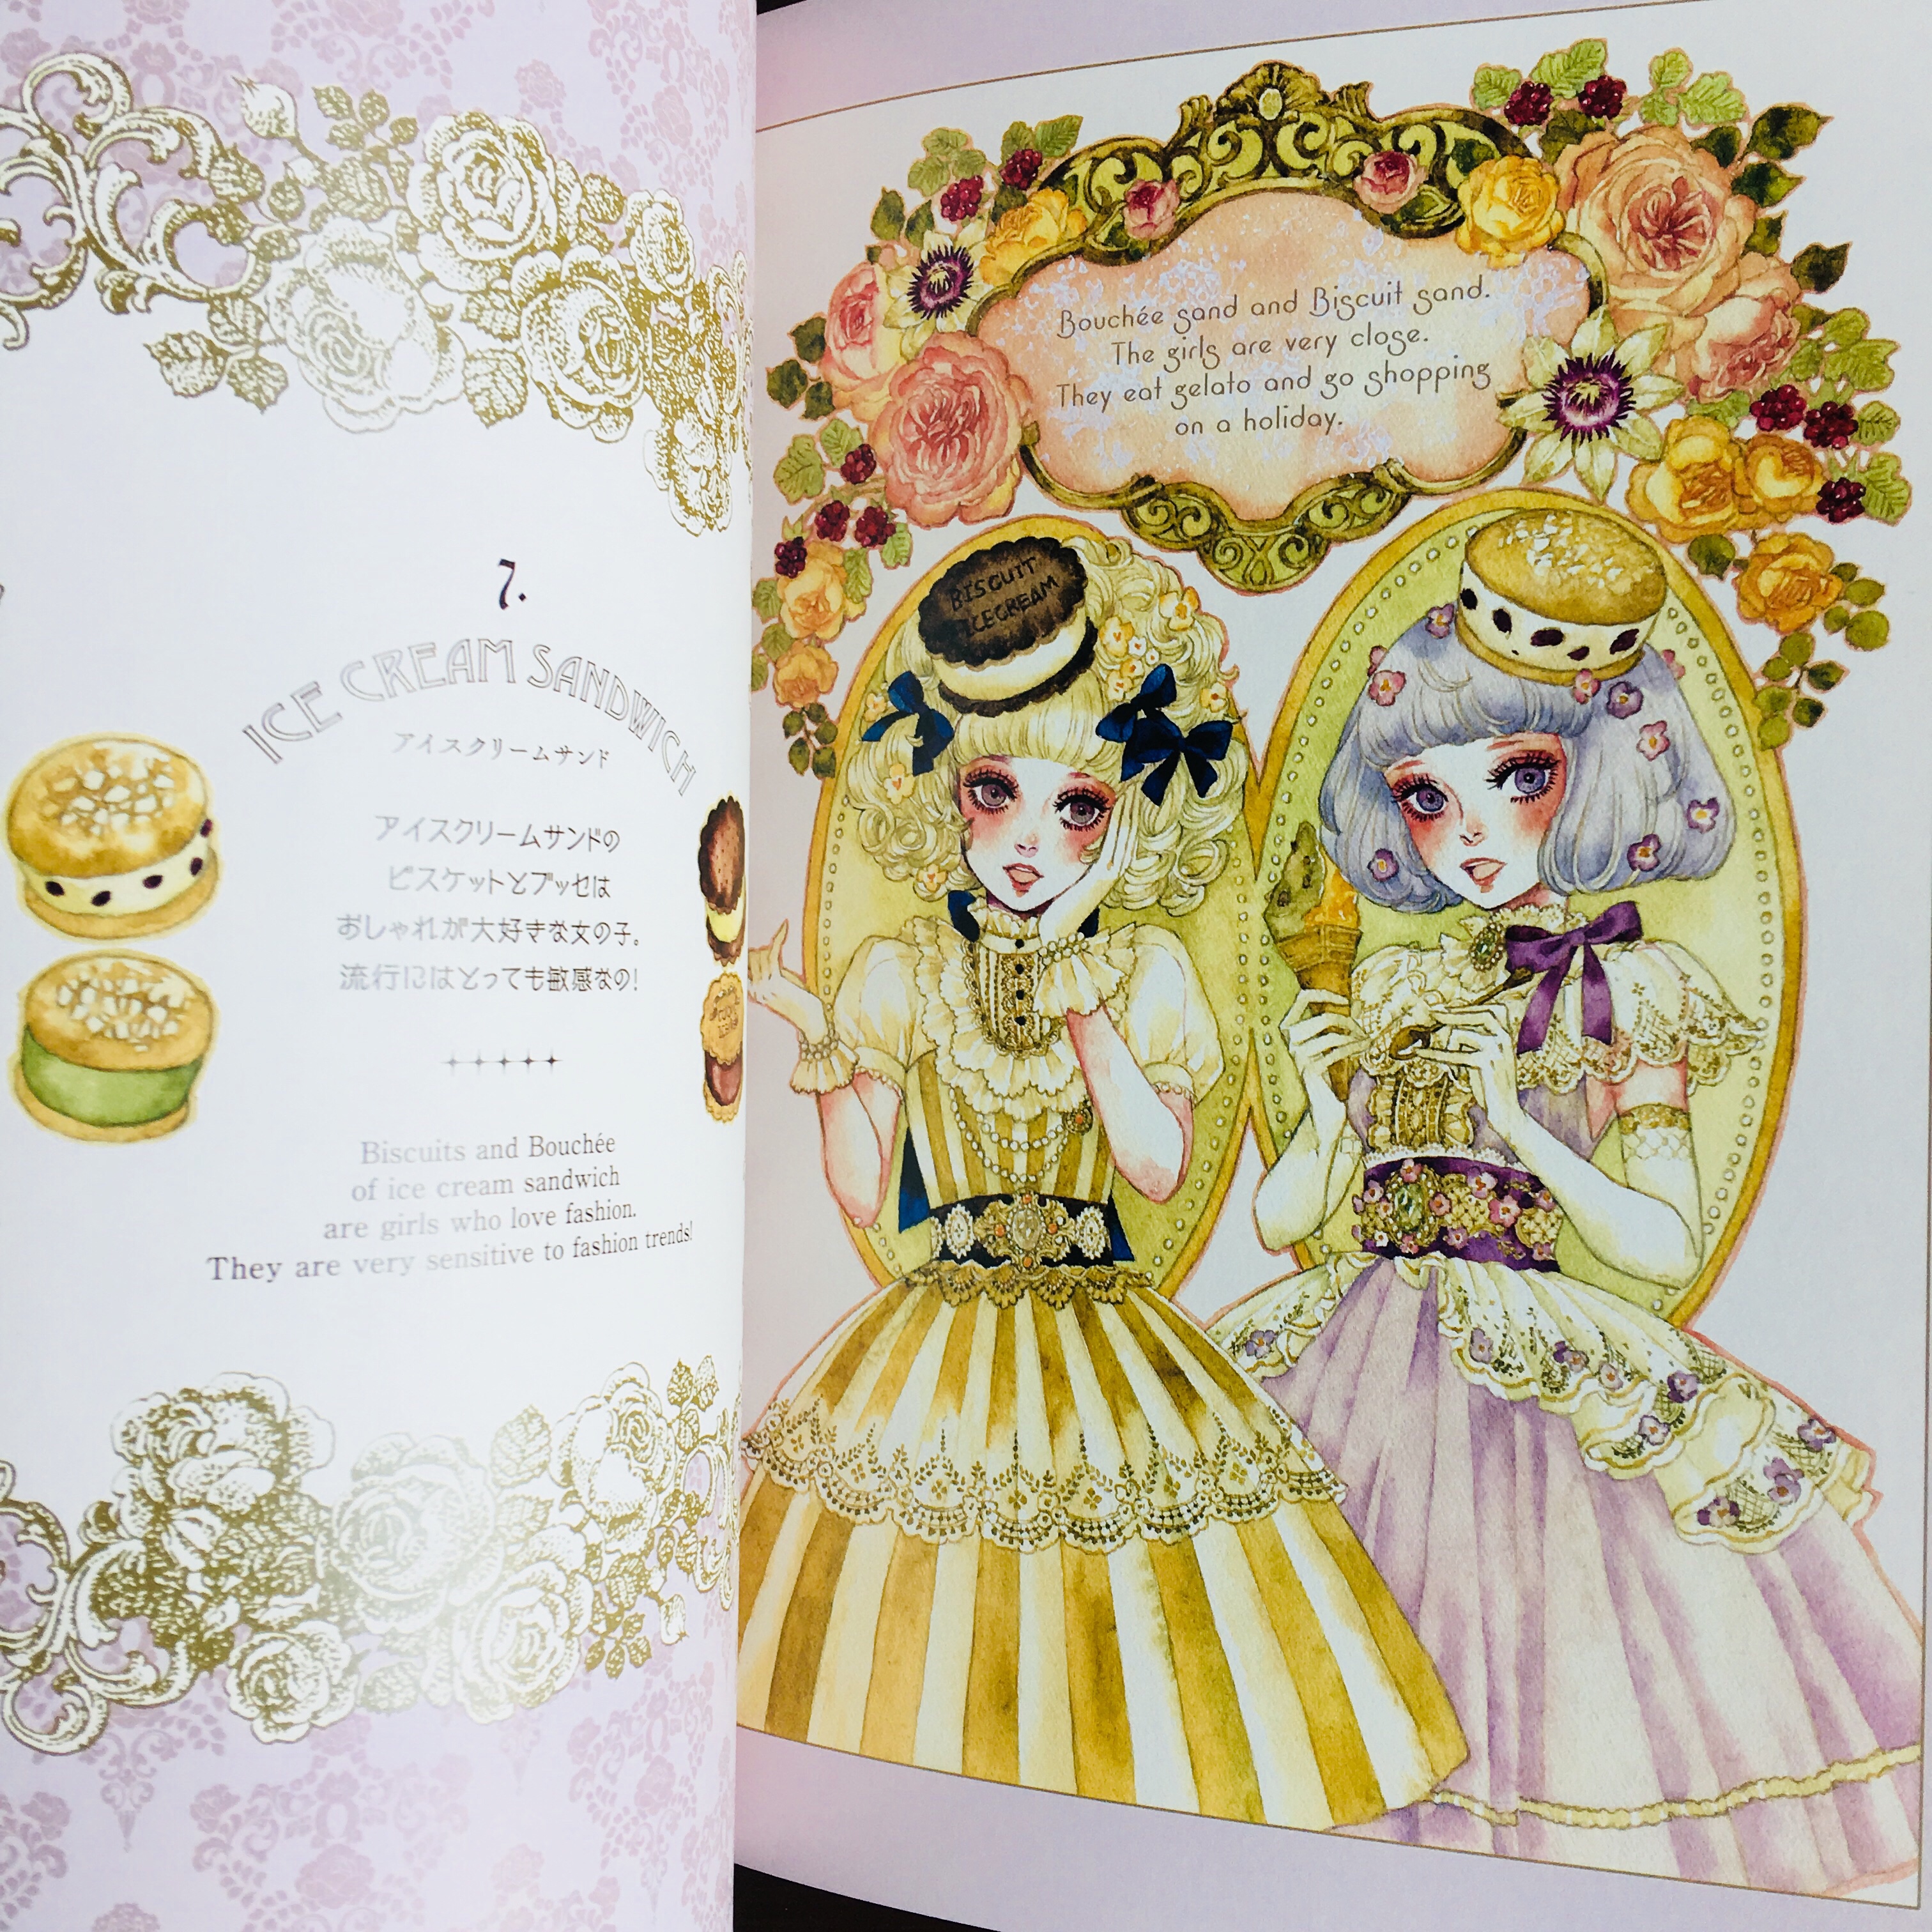 Sakizo Color Art Book ALICE/'S WORLD 2 Sakizou